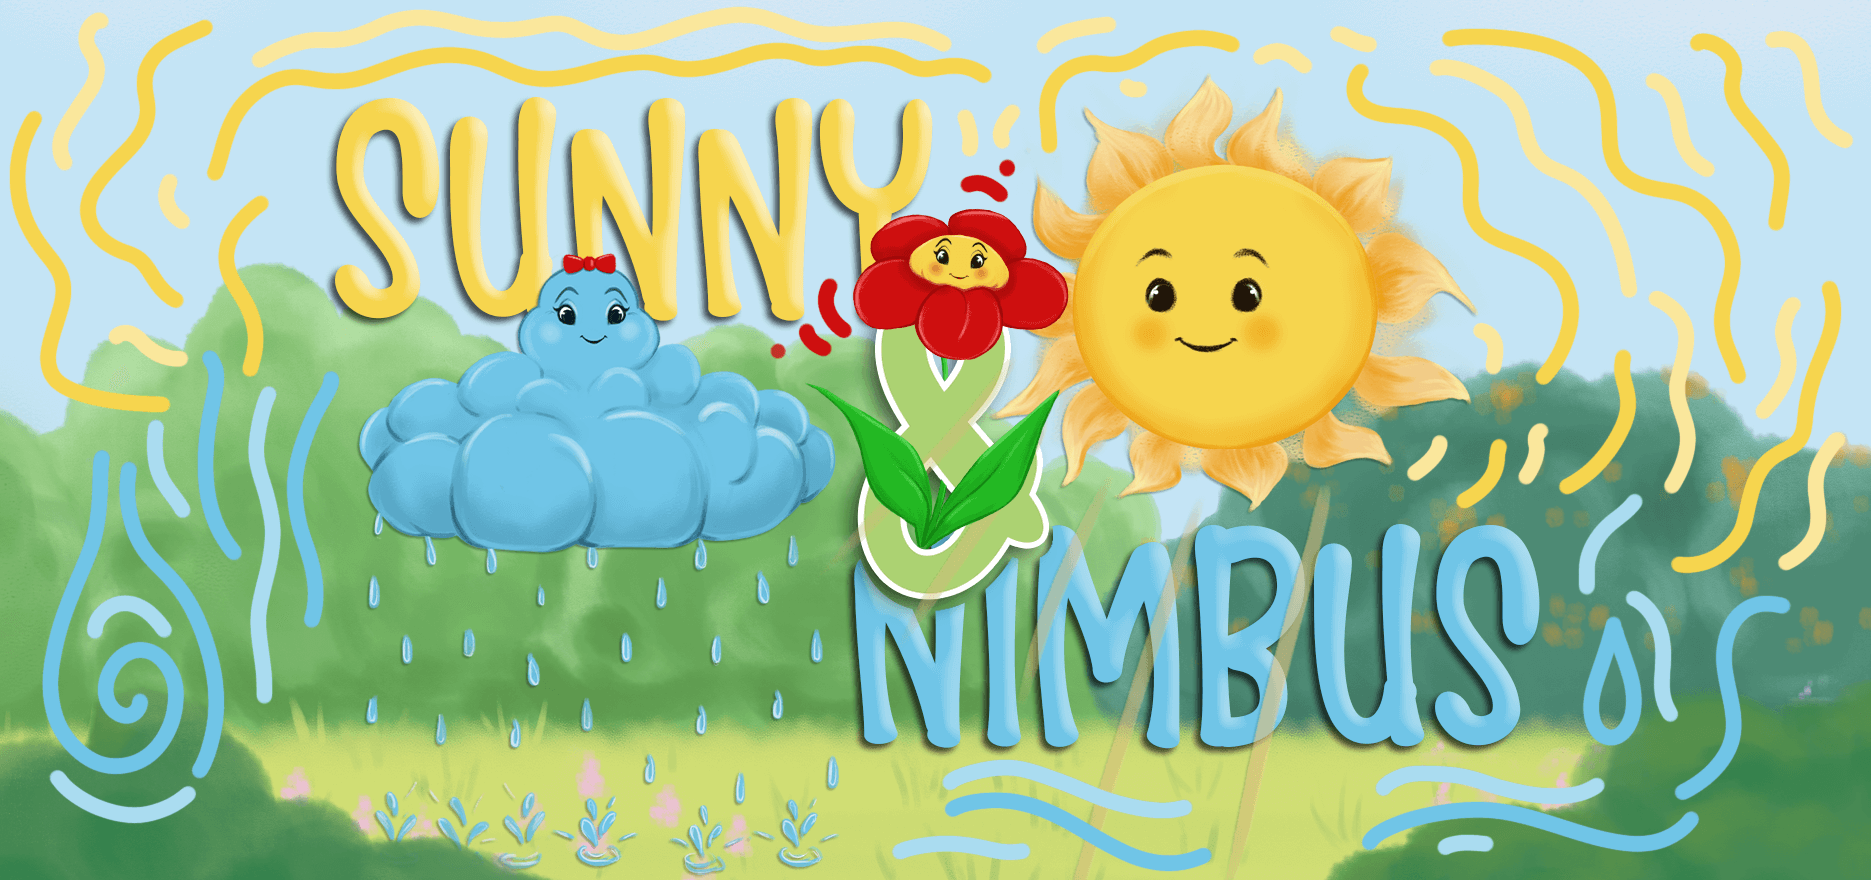 Zoy: Children’s Books App -  "Sunny and Nimbus" Teaser